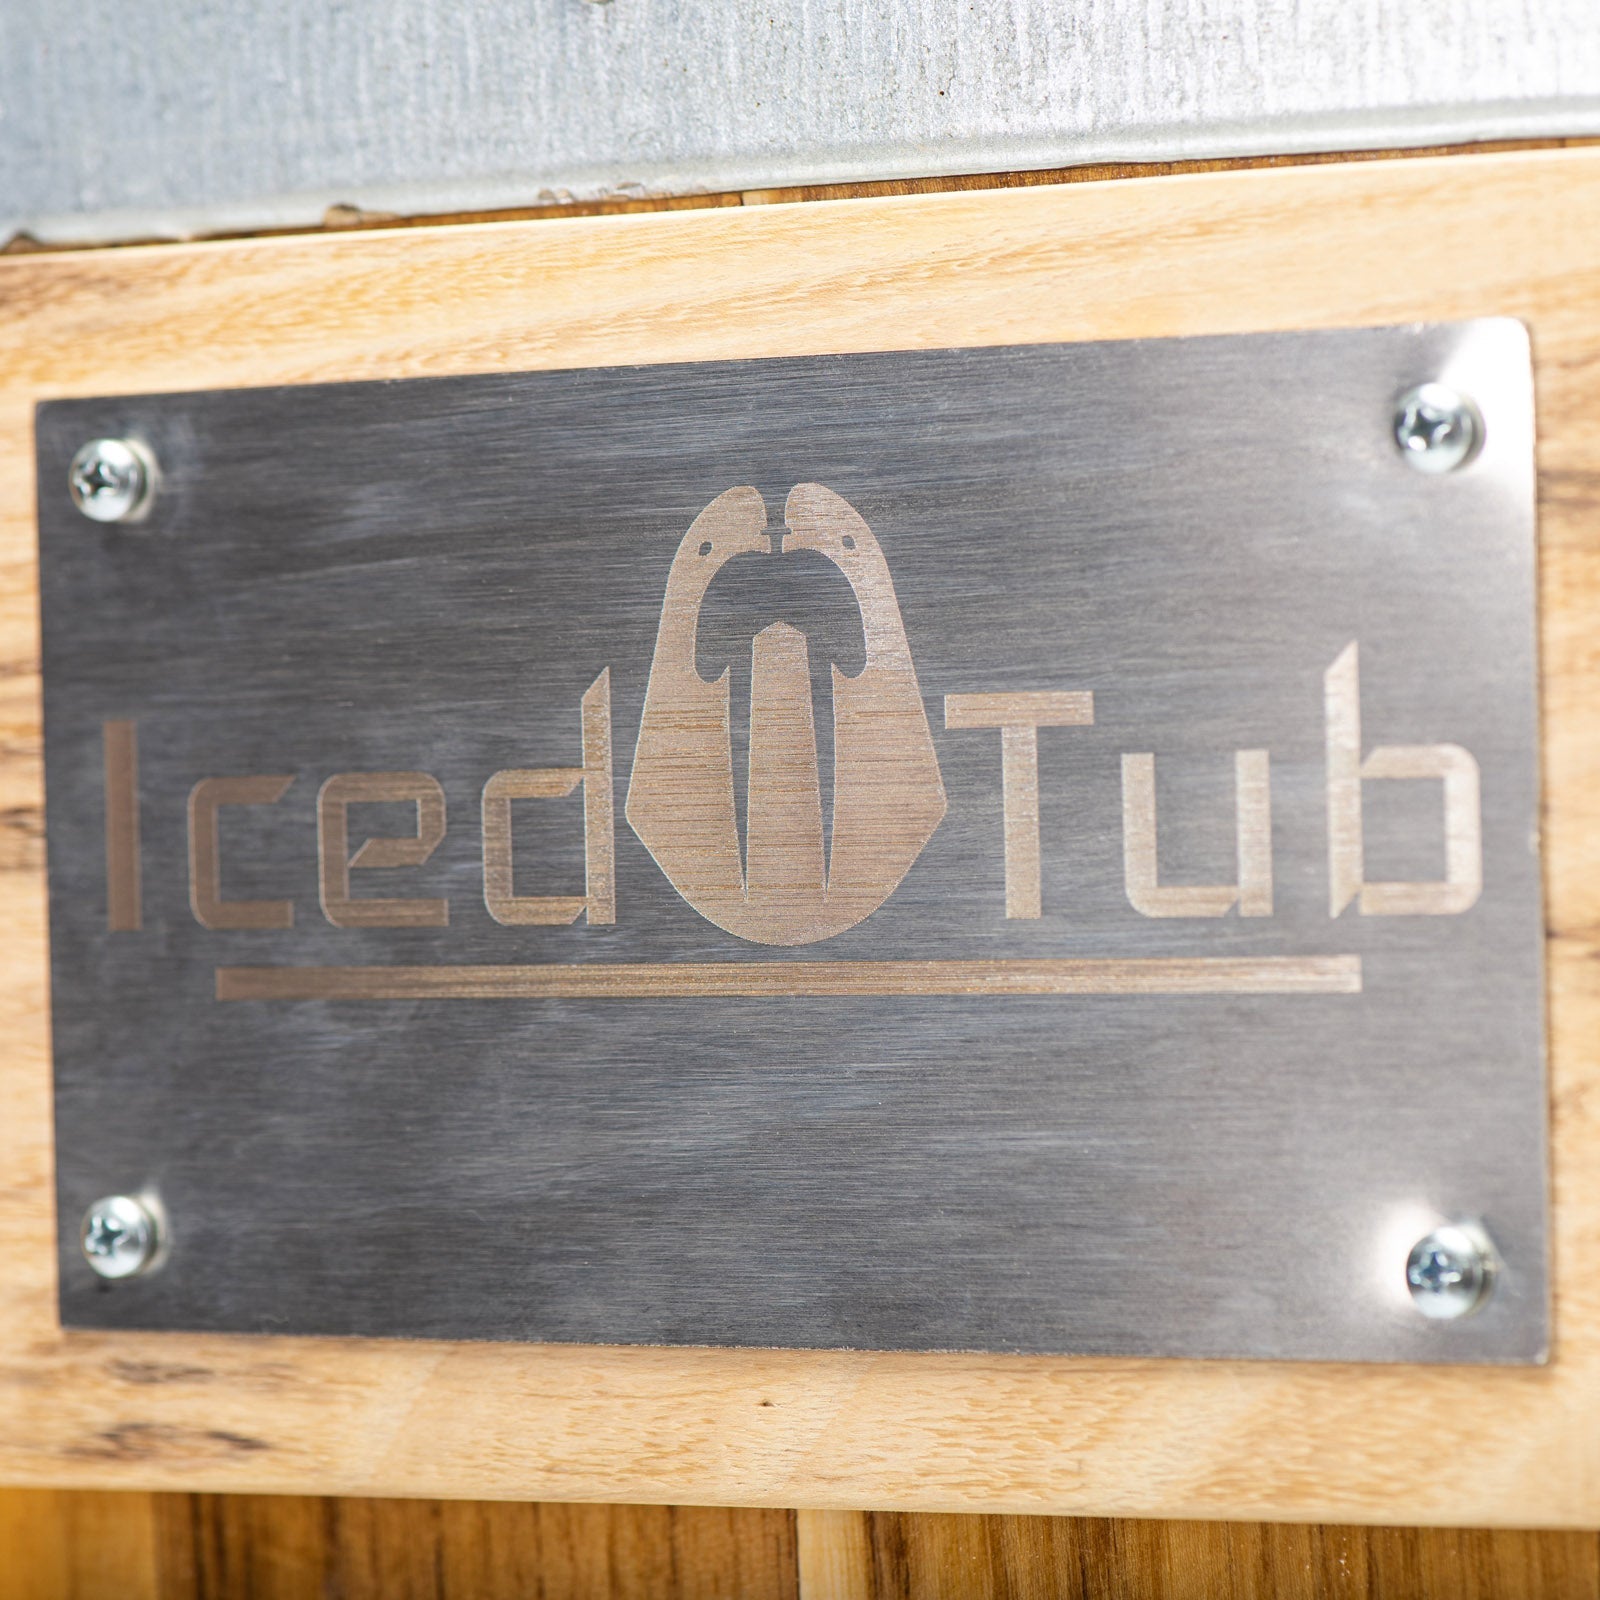 iCed Tub iCedArc Ellipse Shaped Wooden ice bath